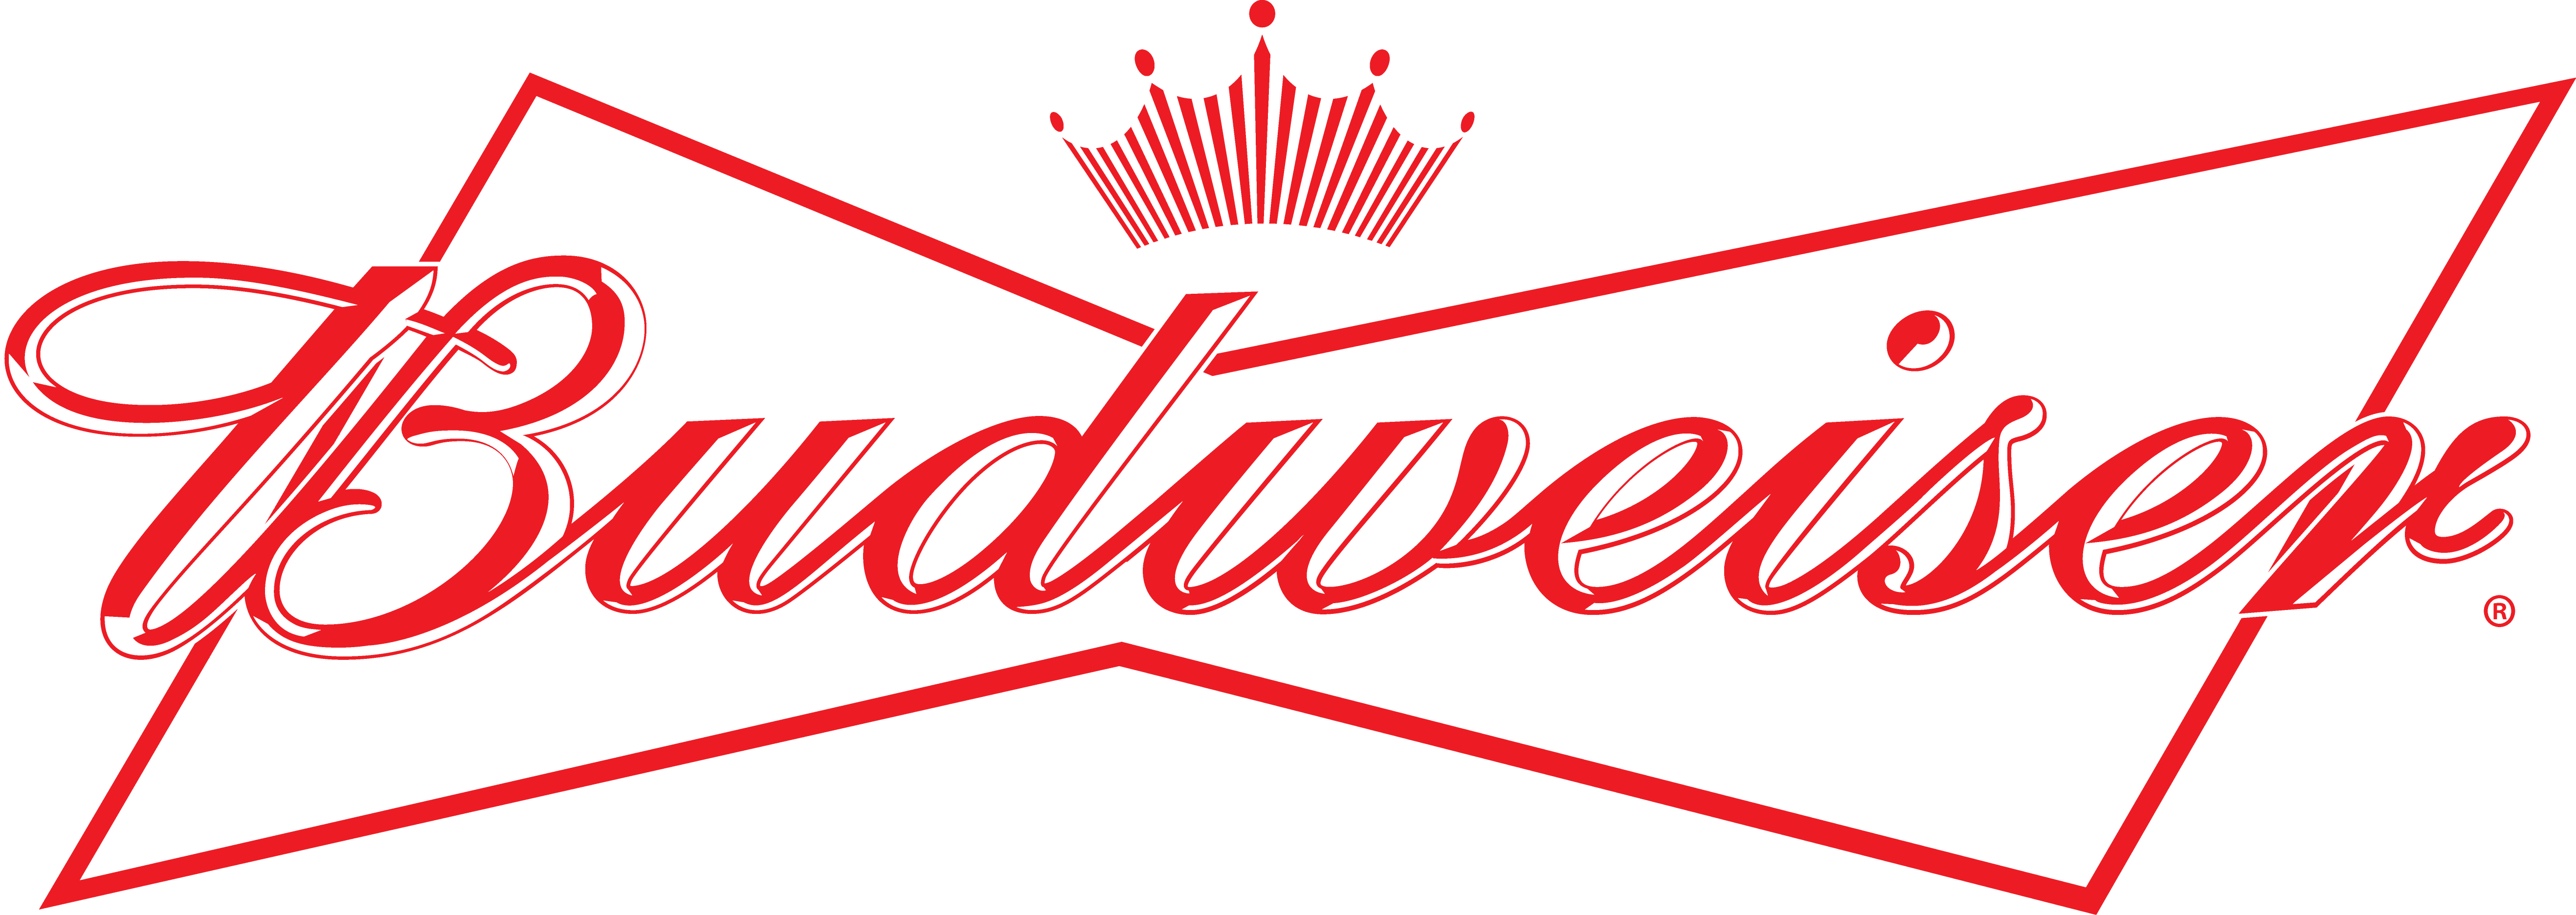 budweiser-logo-png-1